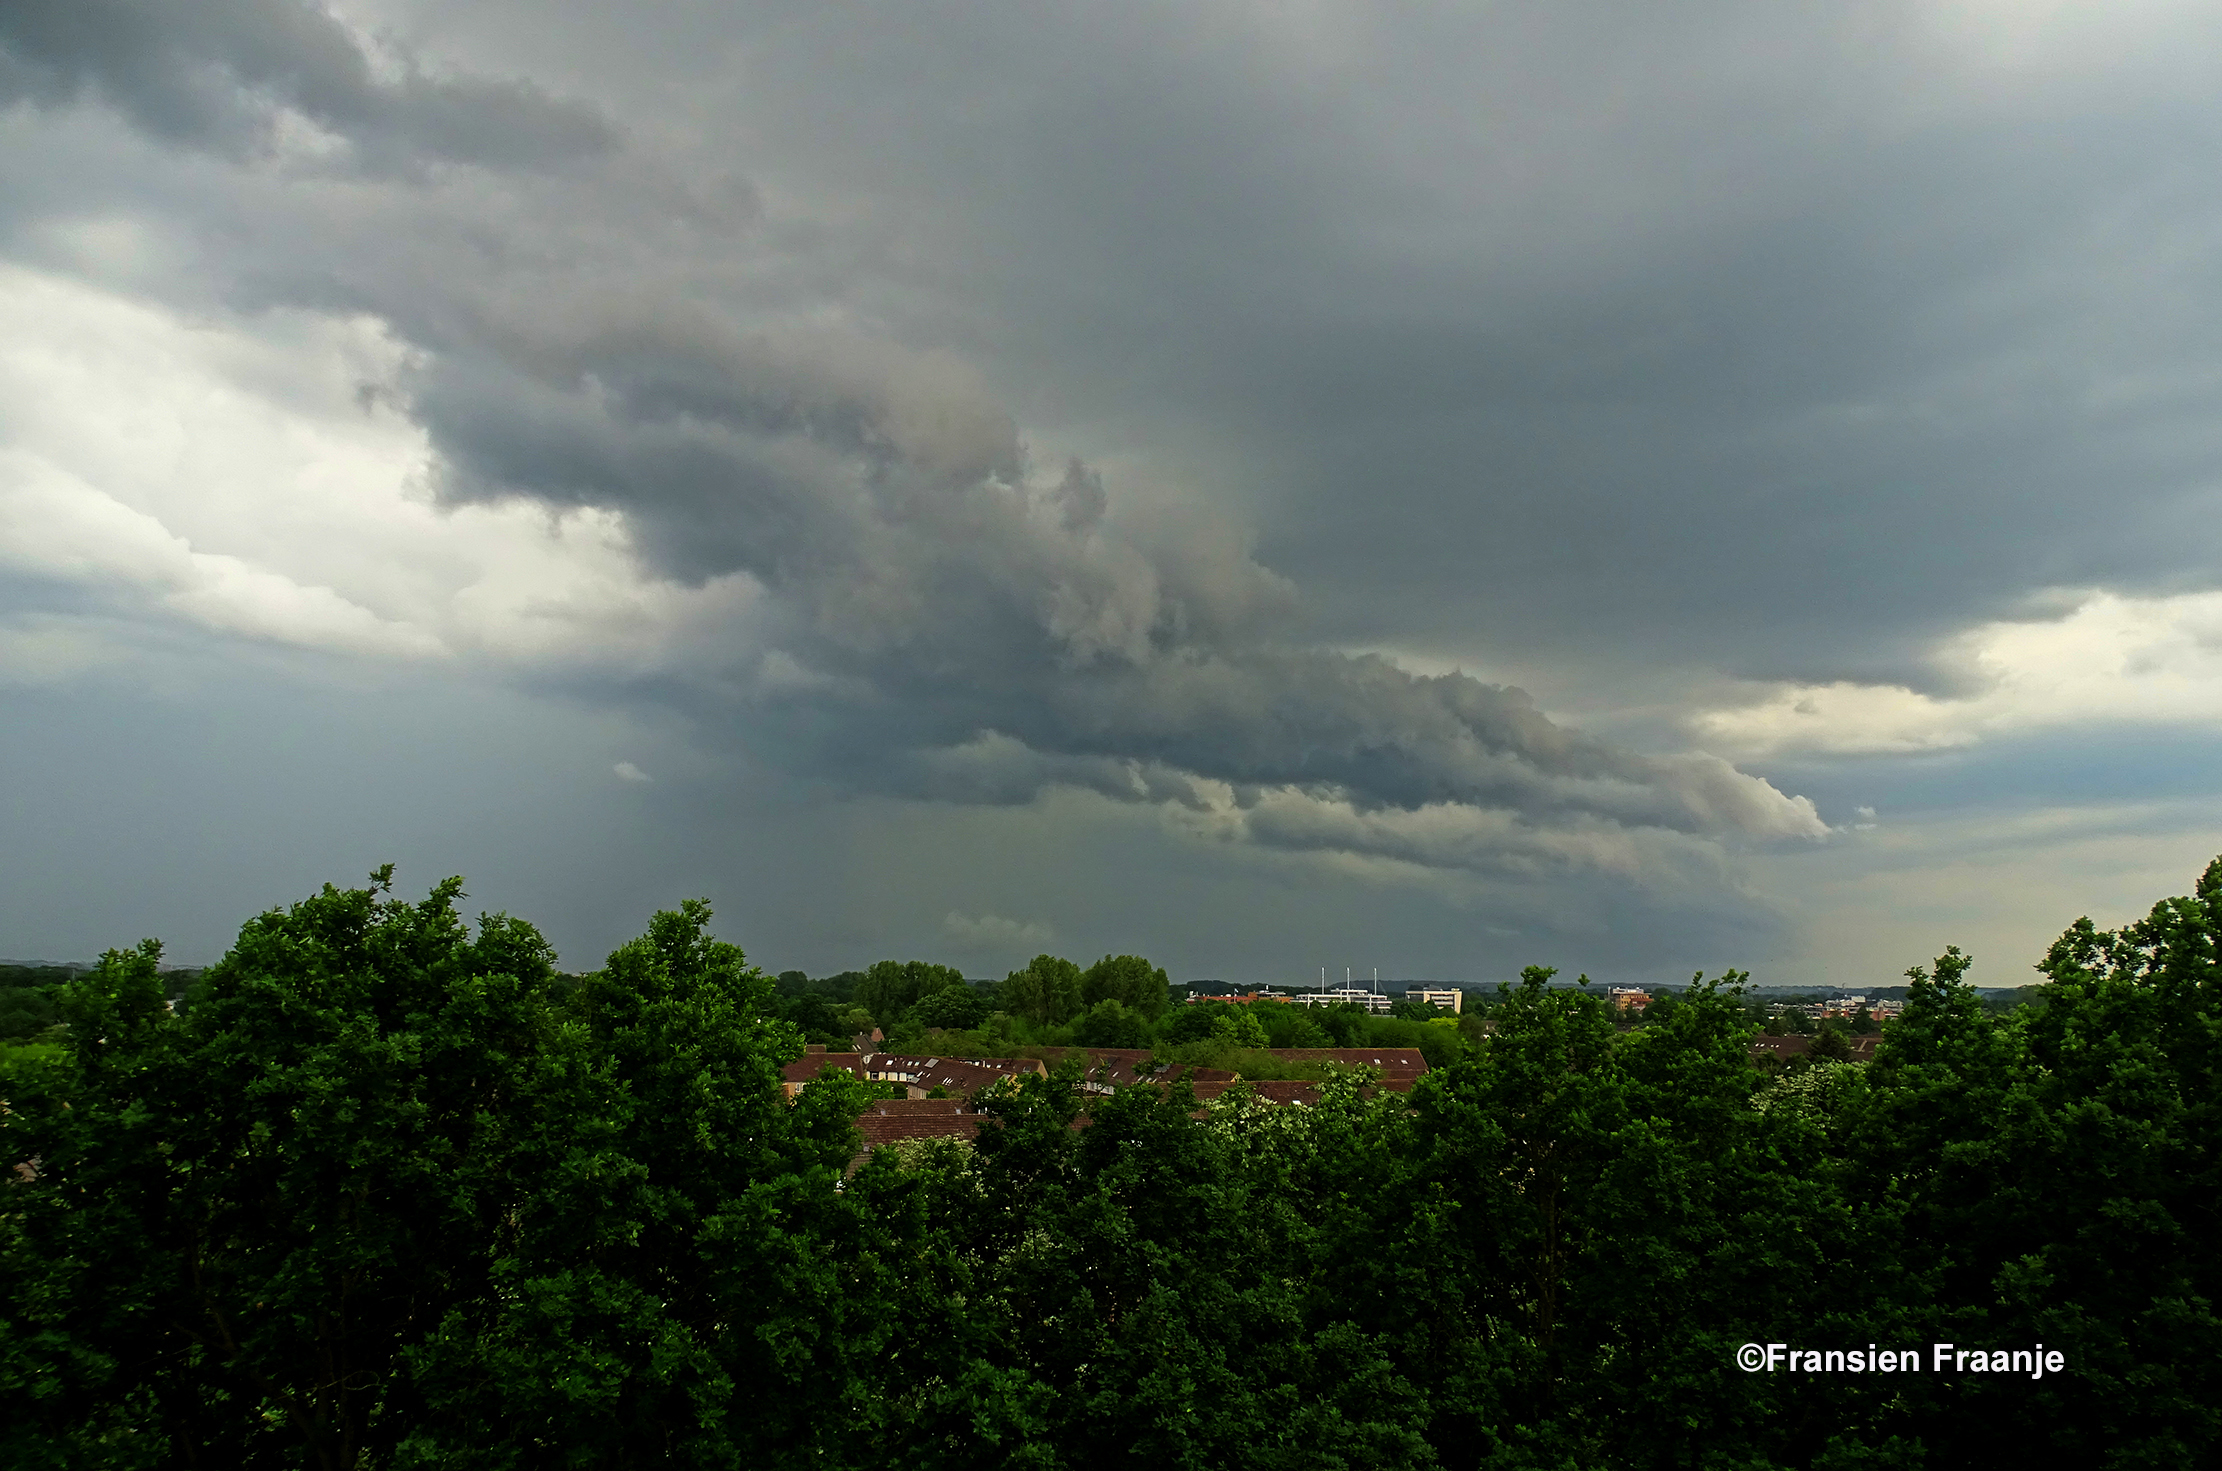  Dreigende onweerswolken boven Ede - Foto: ©Fransien Fraanje